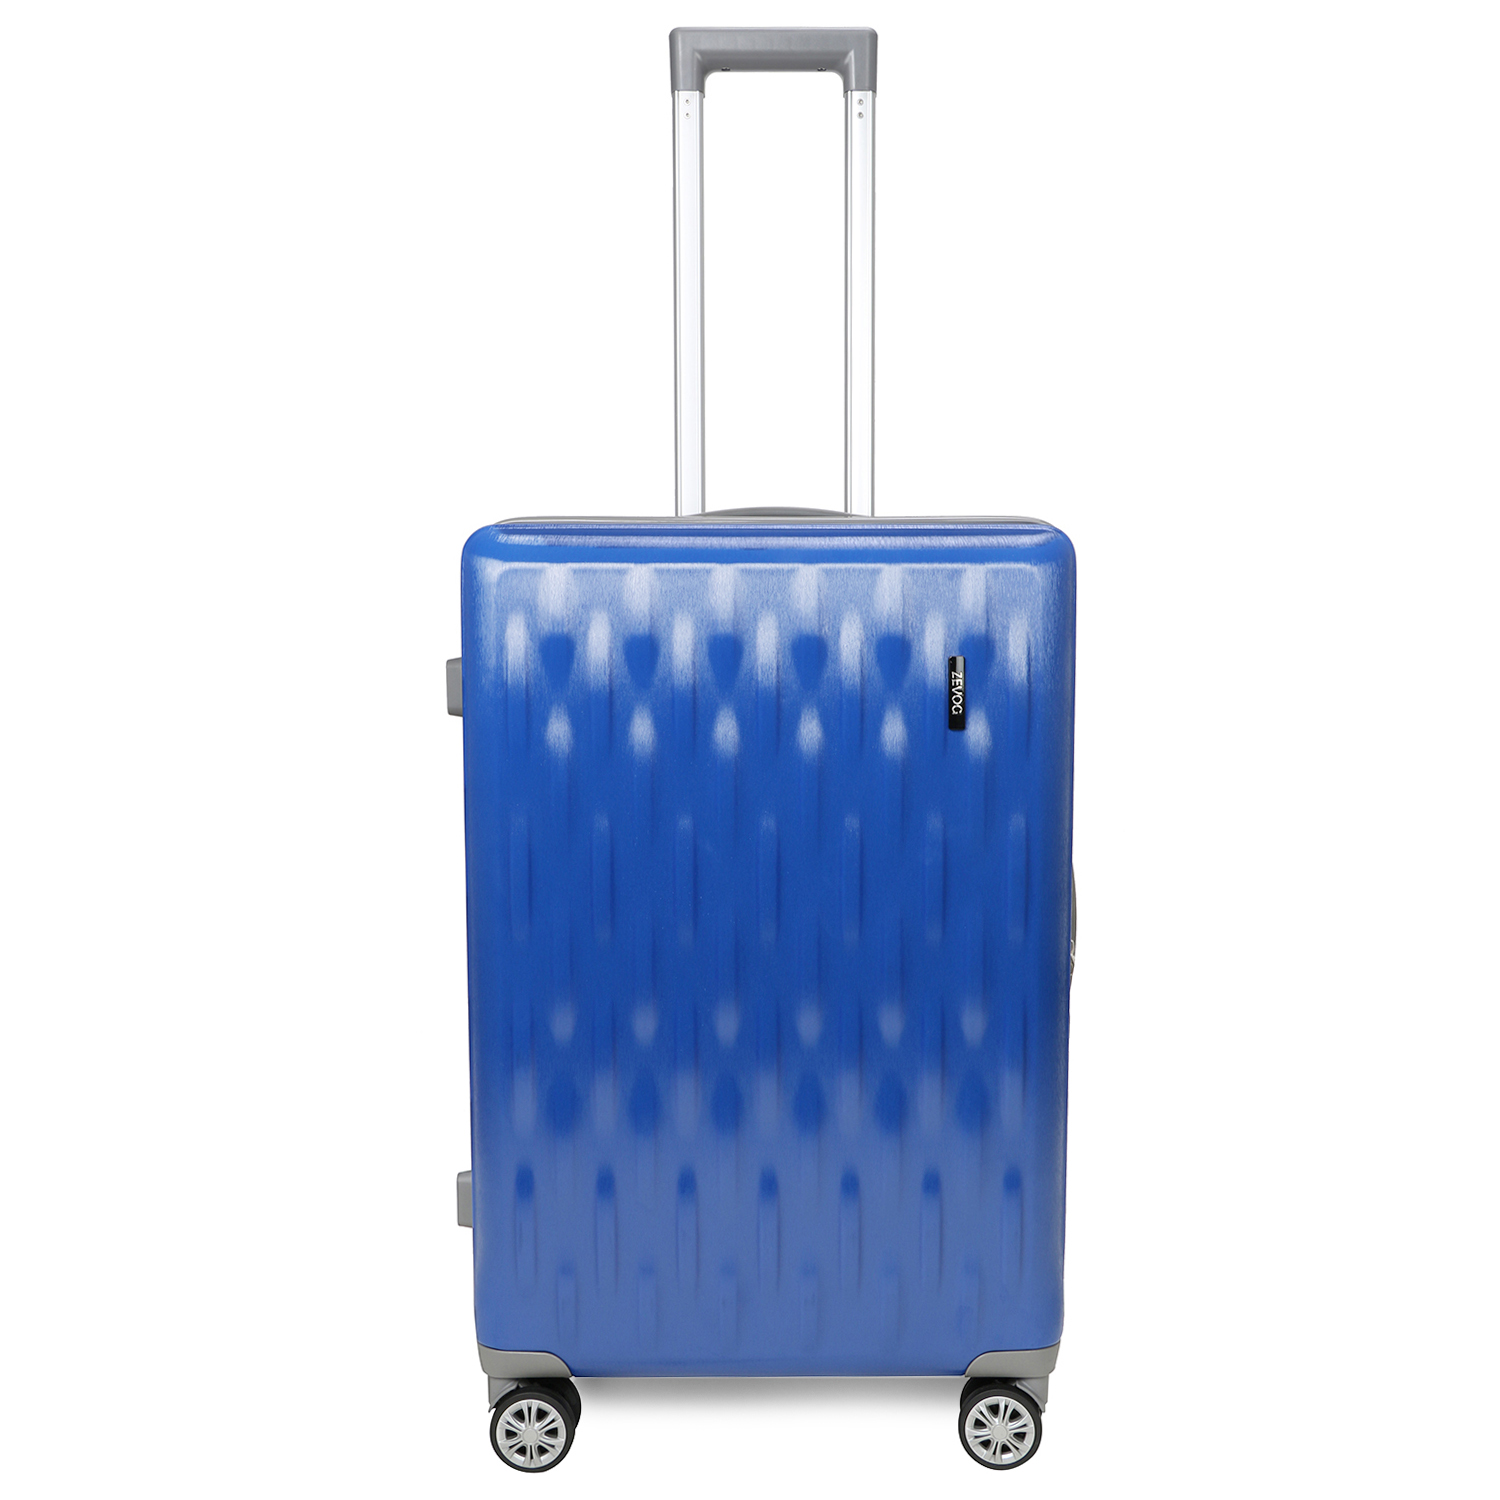 ZEVOG Barcelona Check in Luggage Blue 24 Inch 0759108943404